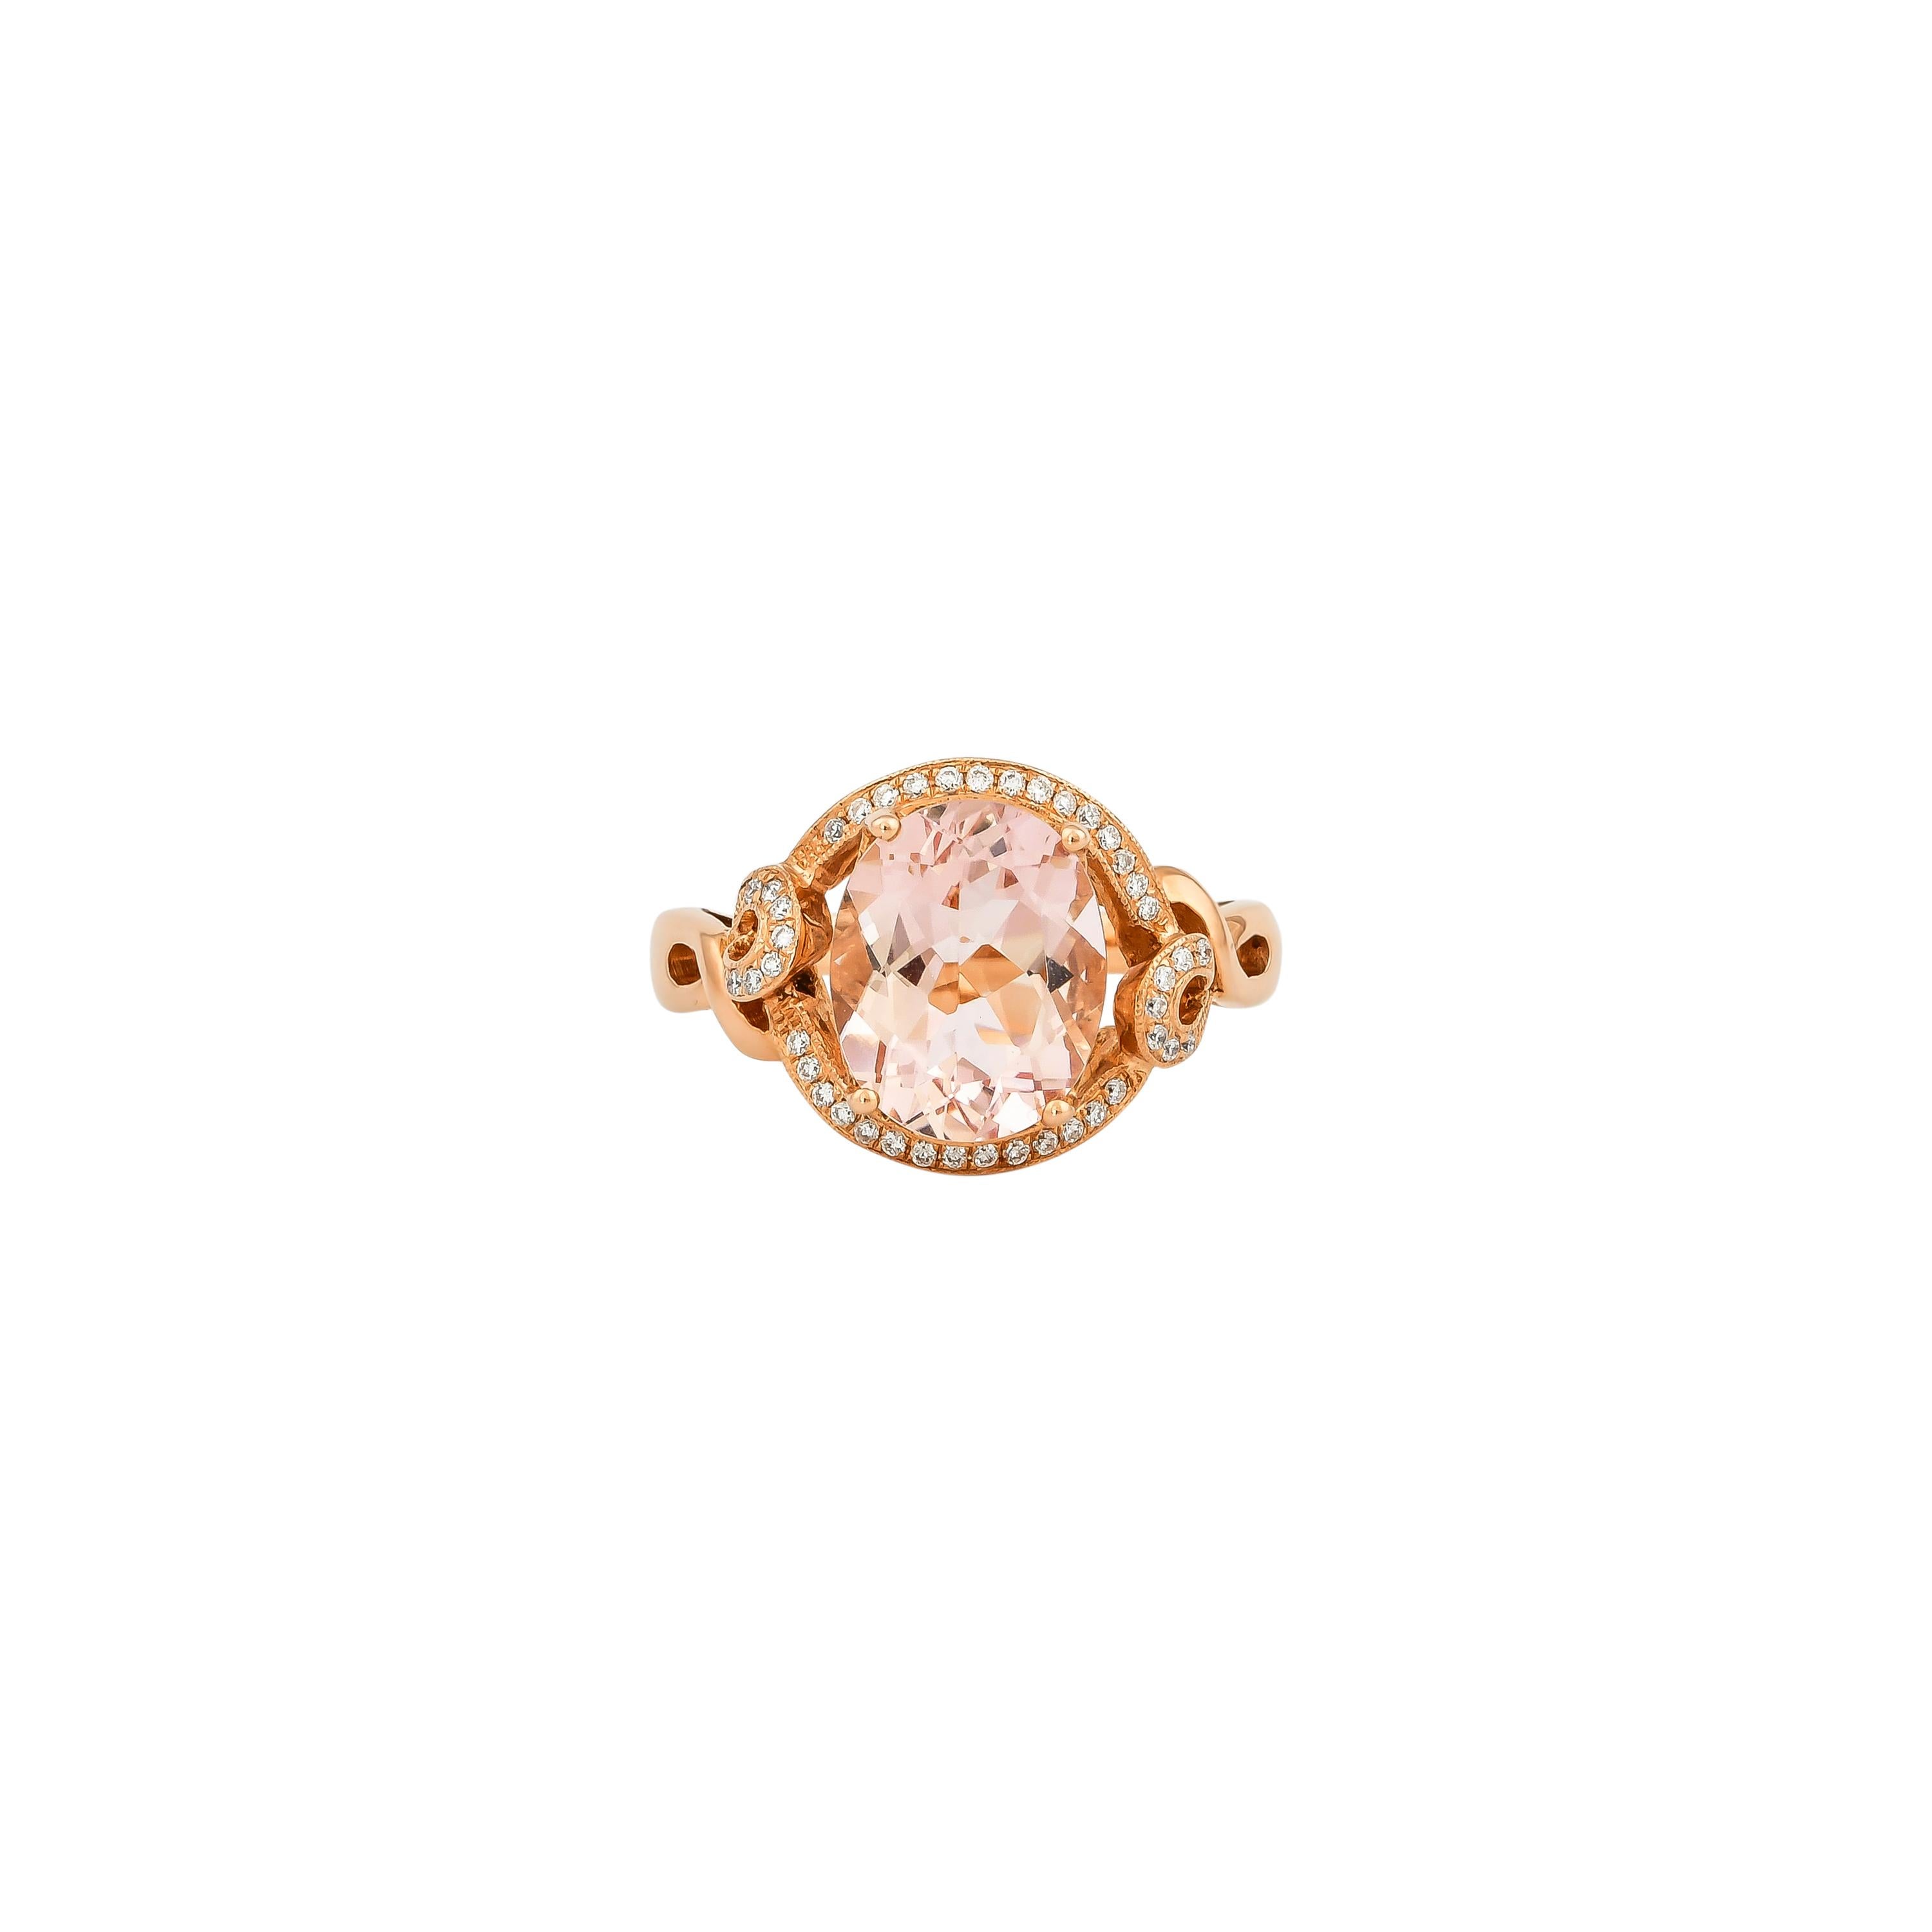 Contemporain Bague en or rose 18 carats avec morganite et diamants de 3,07 carats. en vente